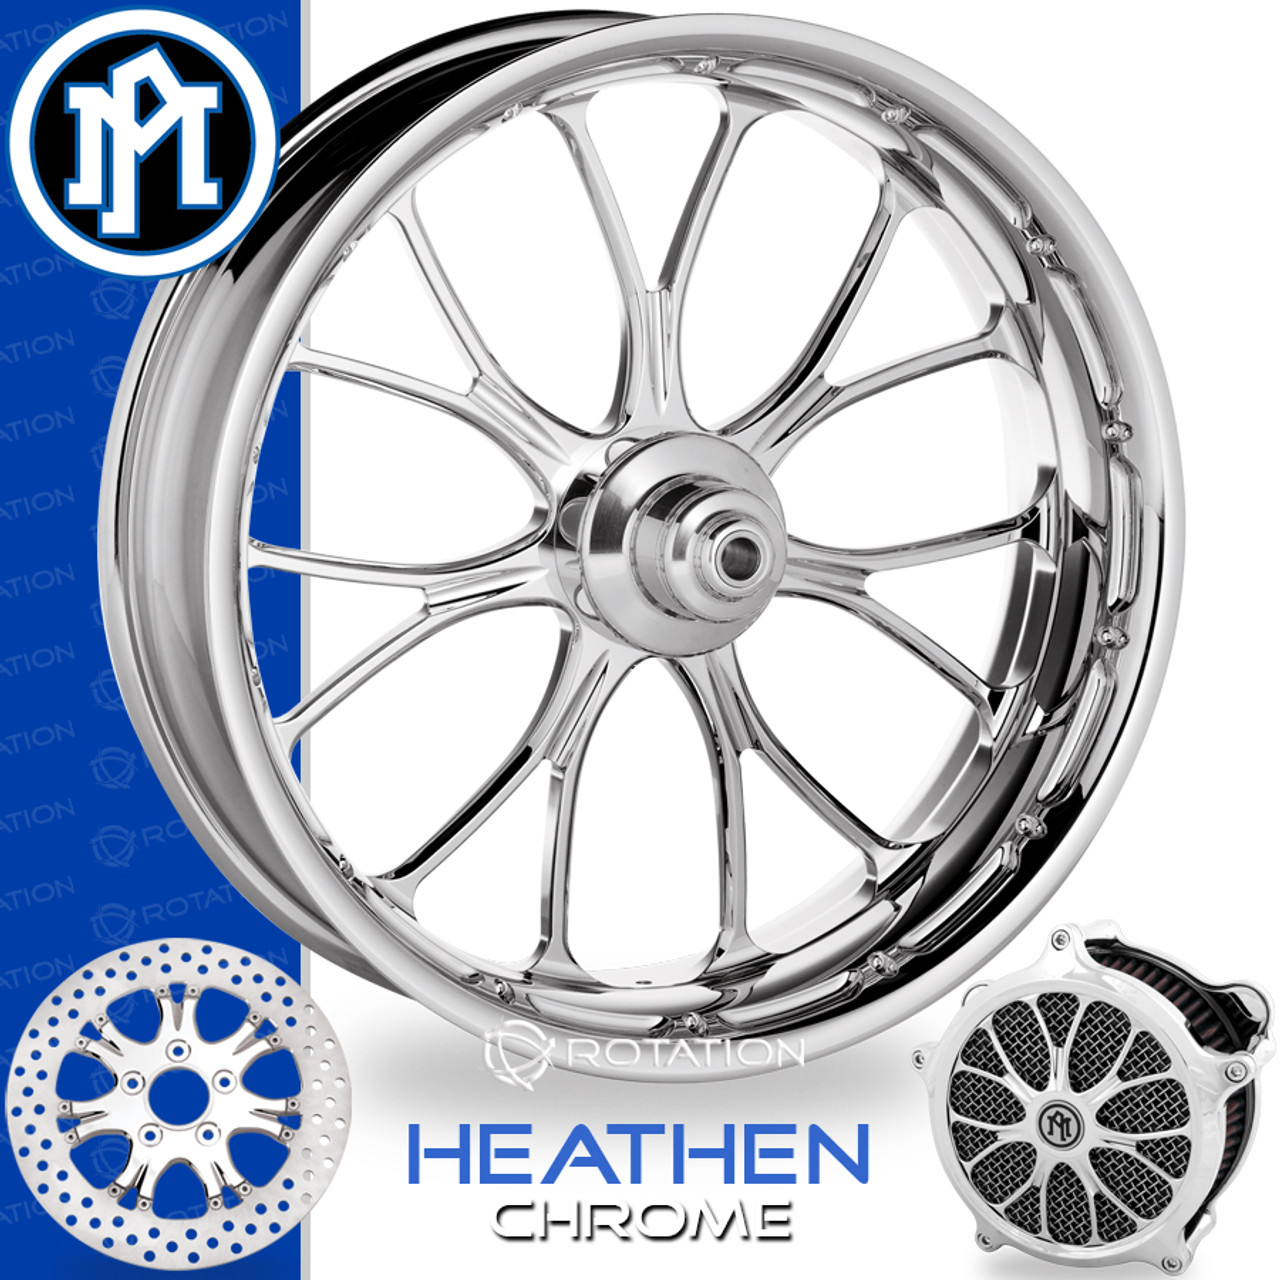 Performance Machine PM Heathen Chrome Custom Motorcycle Wheel